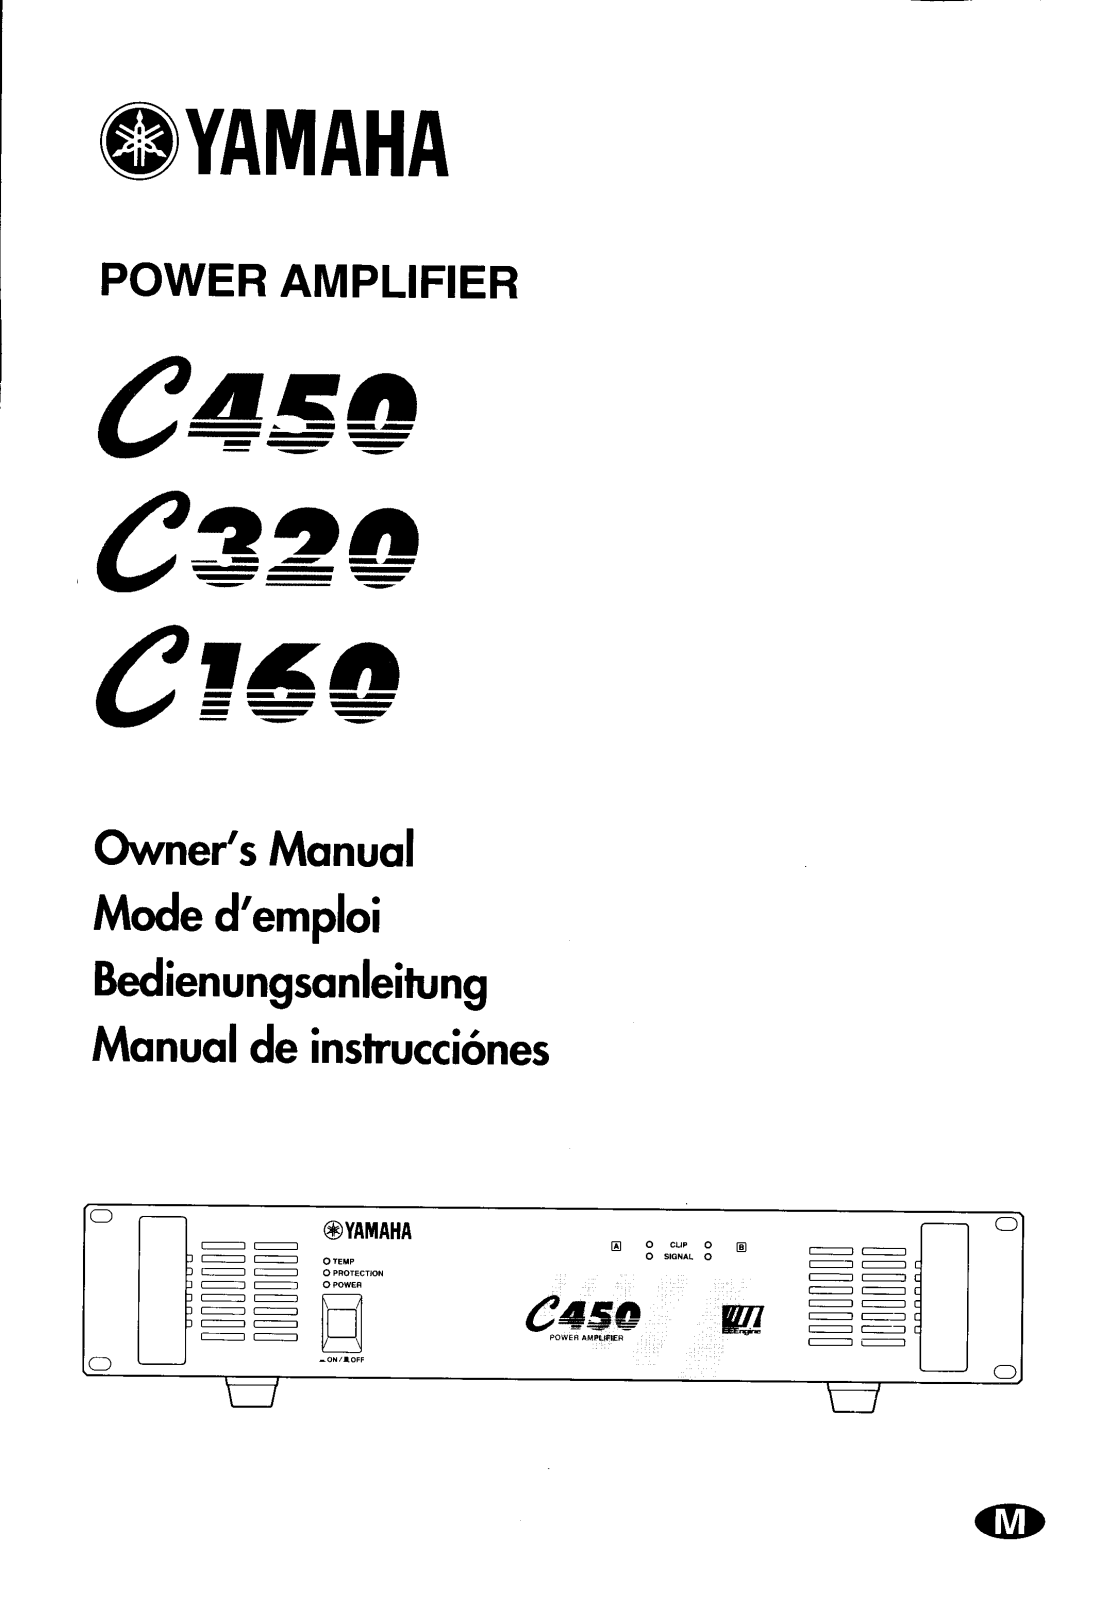 Yamaha C450, C320, C160 Owner’s Manual